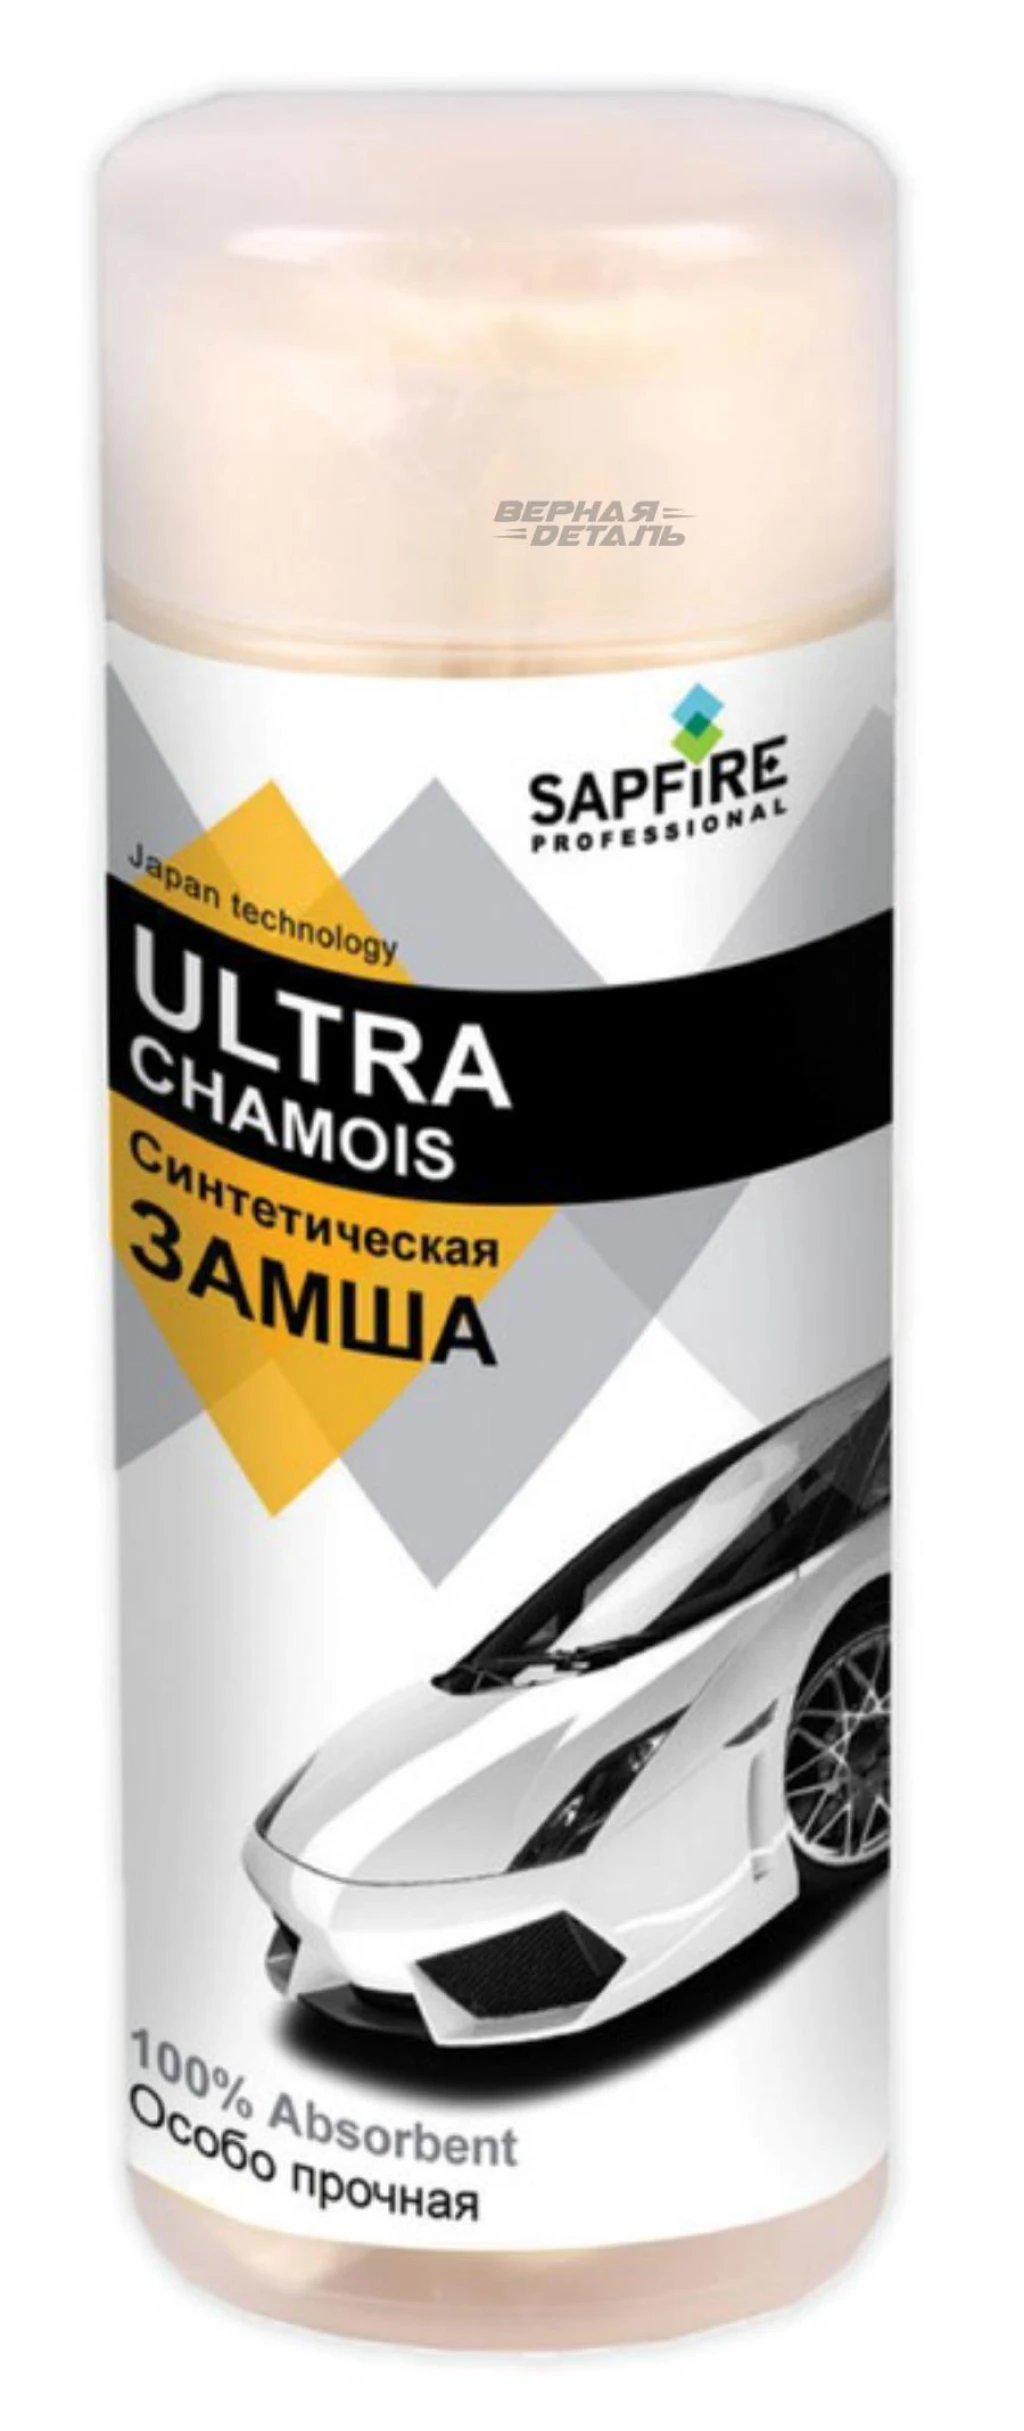 Салфетка замша искусственная (43х33 см) "SAPFIRE" Ultra Chamois